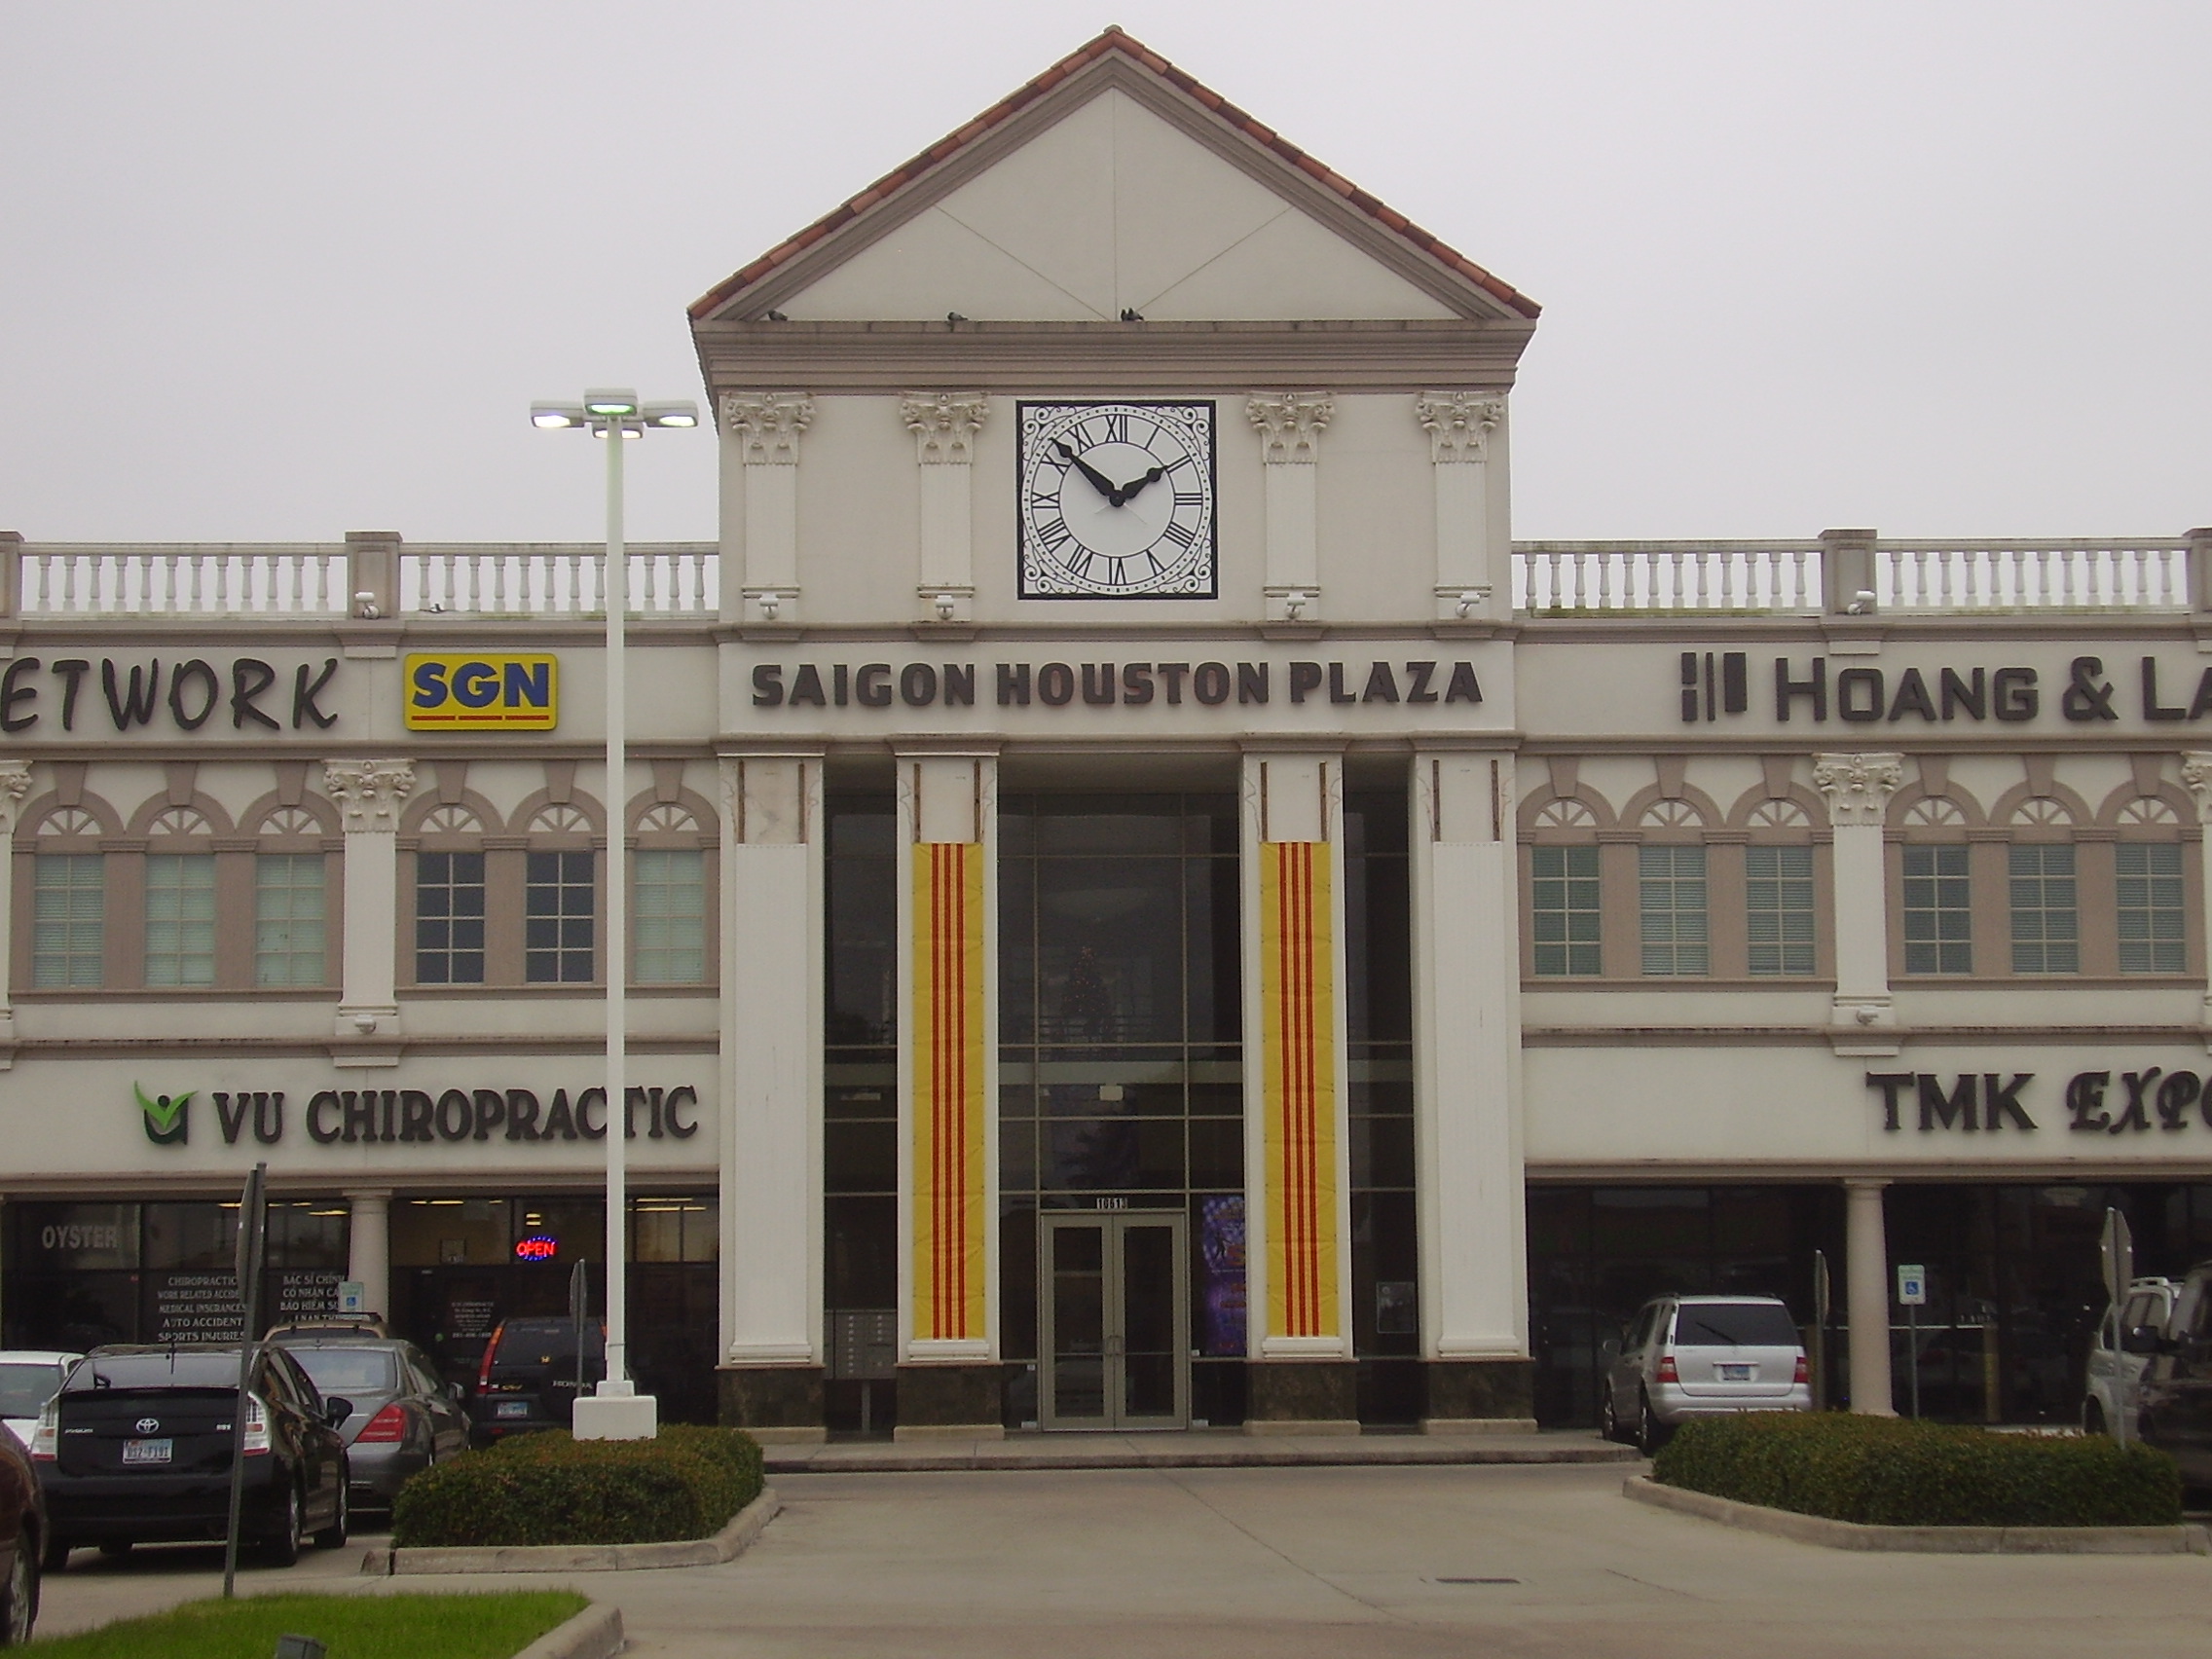 Saigon Plaza in Houston's Chinatown neighborhood. Credit: WhisperToMe, CC0, via Wikimedia Commons